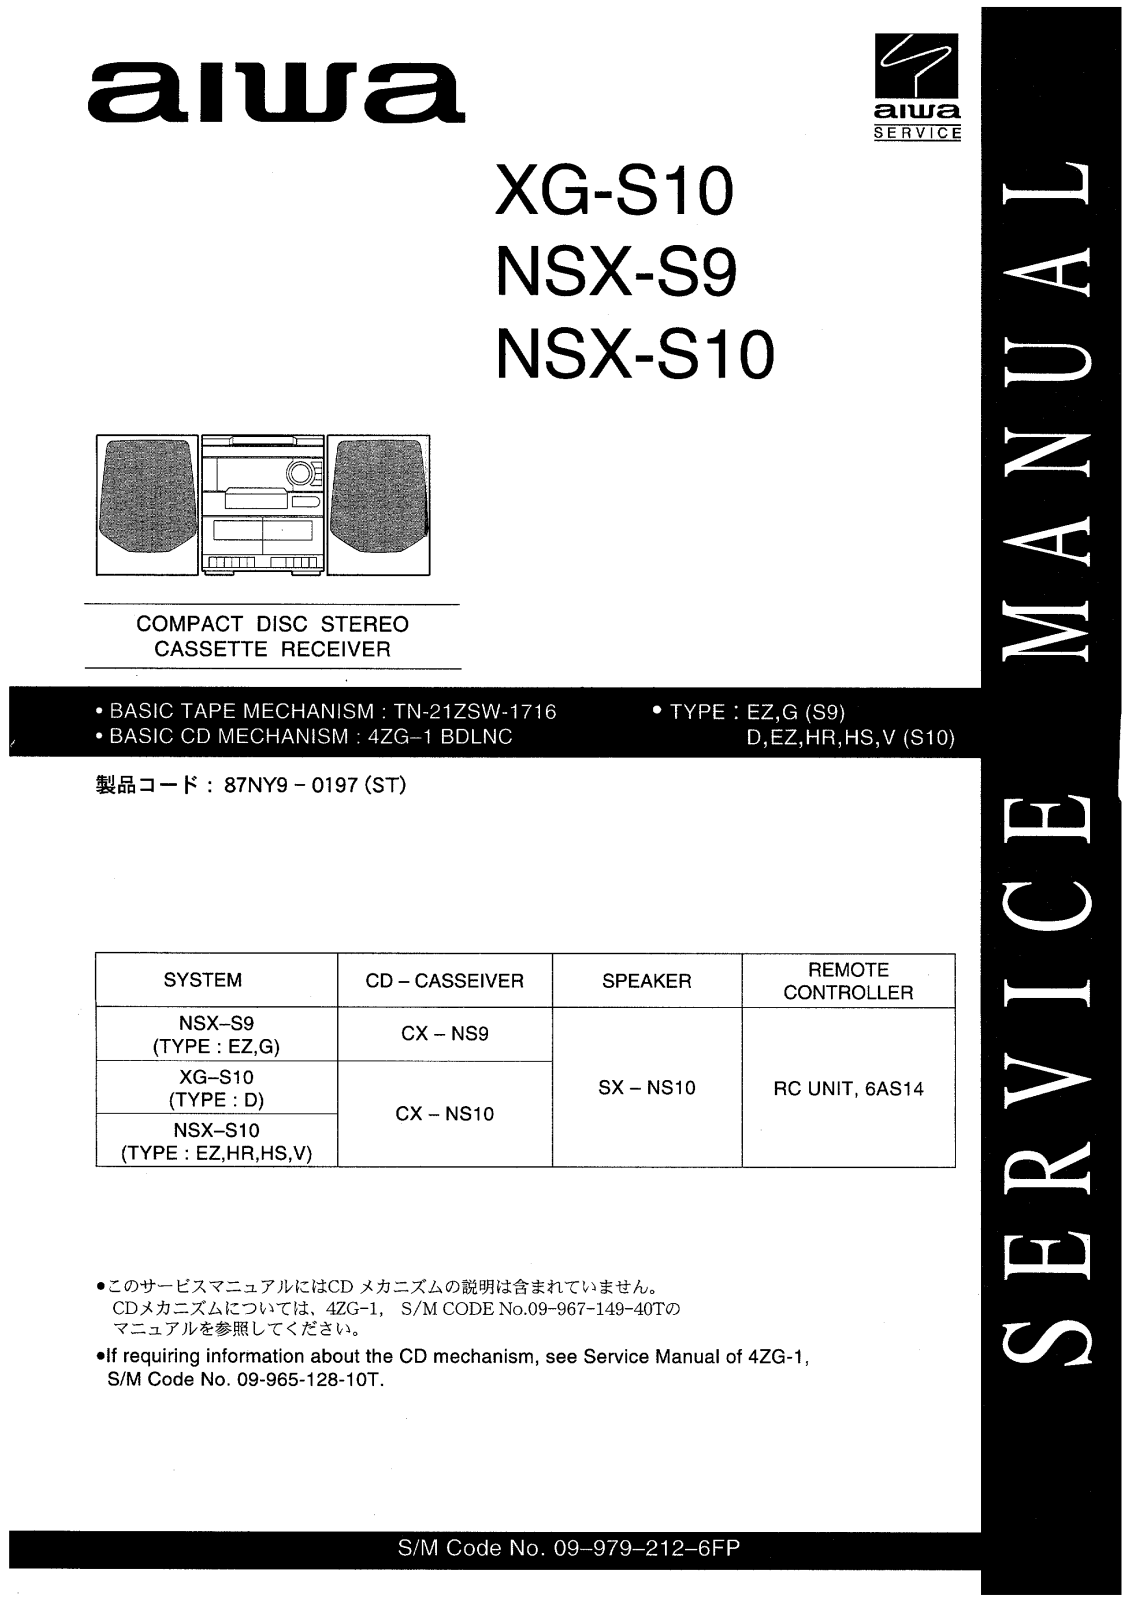 Aiwa XG-S10, NSX-S9, NSX-S10 Service Manual